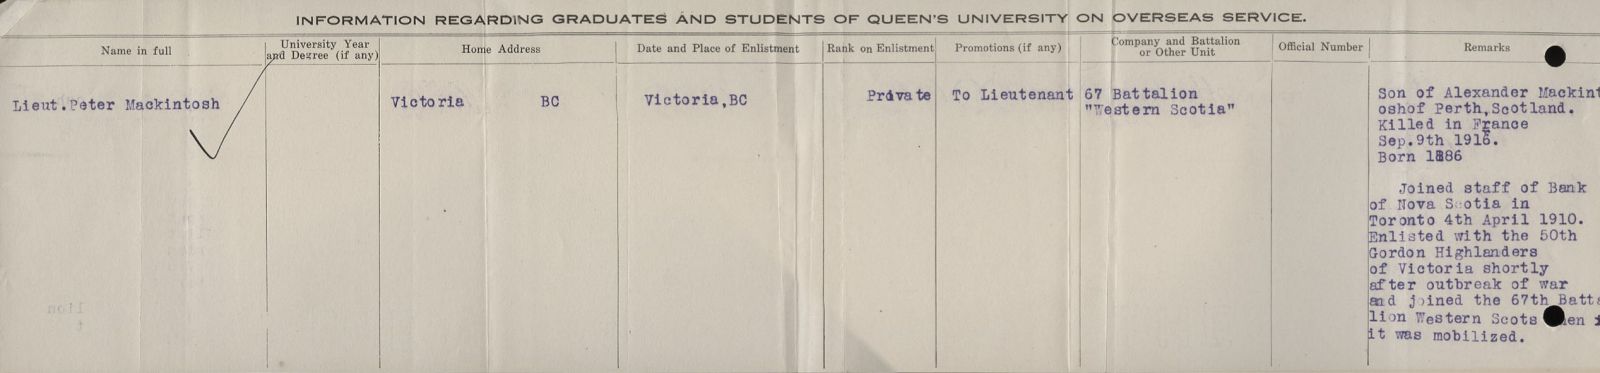 University Overseas Service Record of Mackintosh